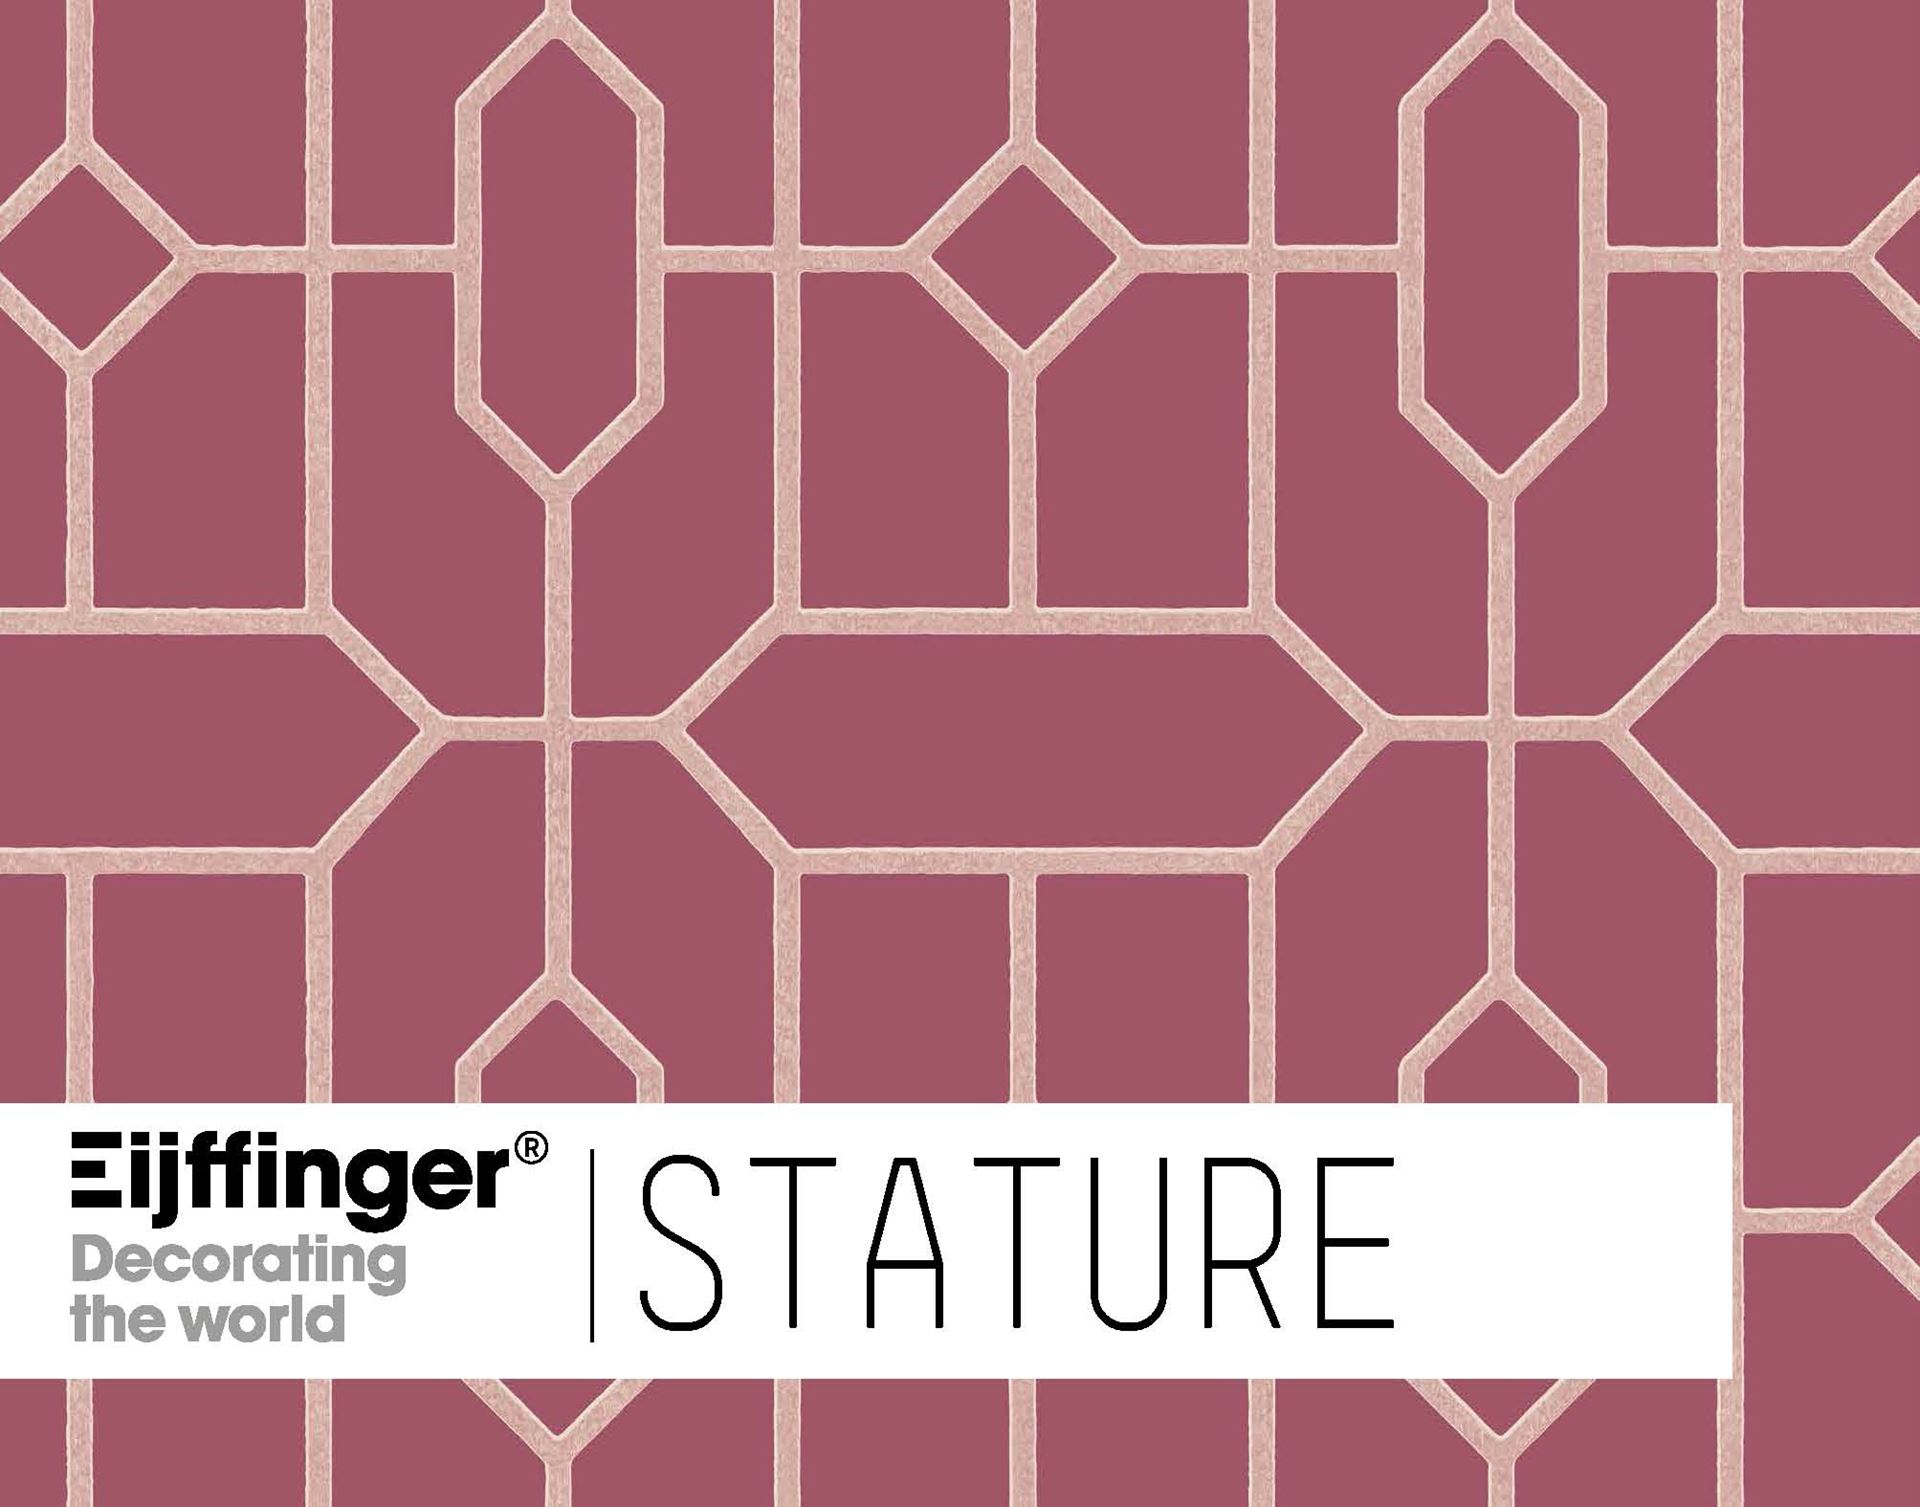 Wallpaper - Stature - Eijffinger